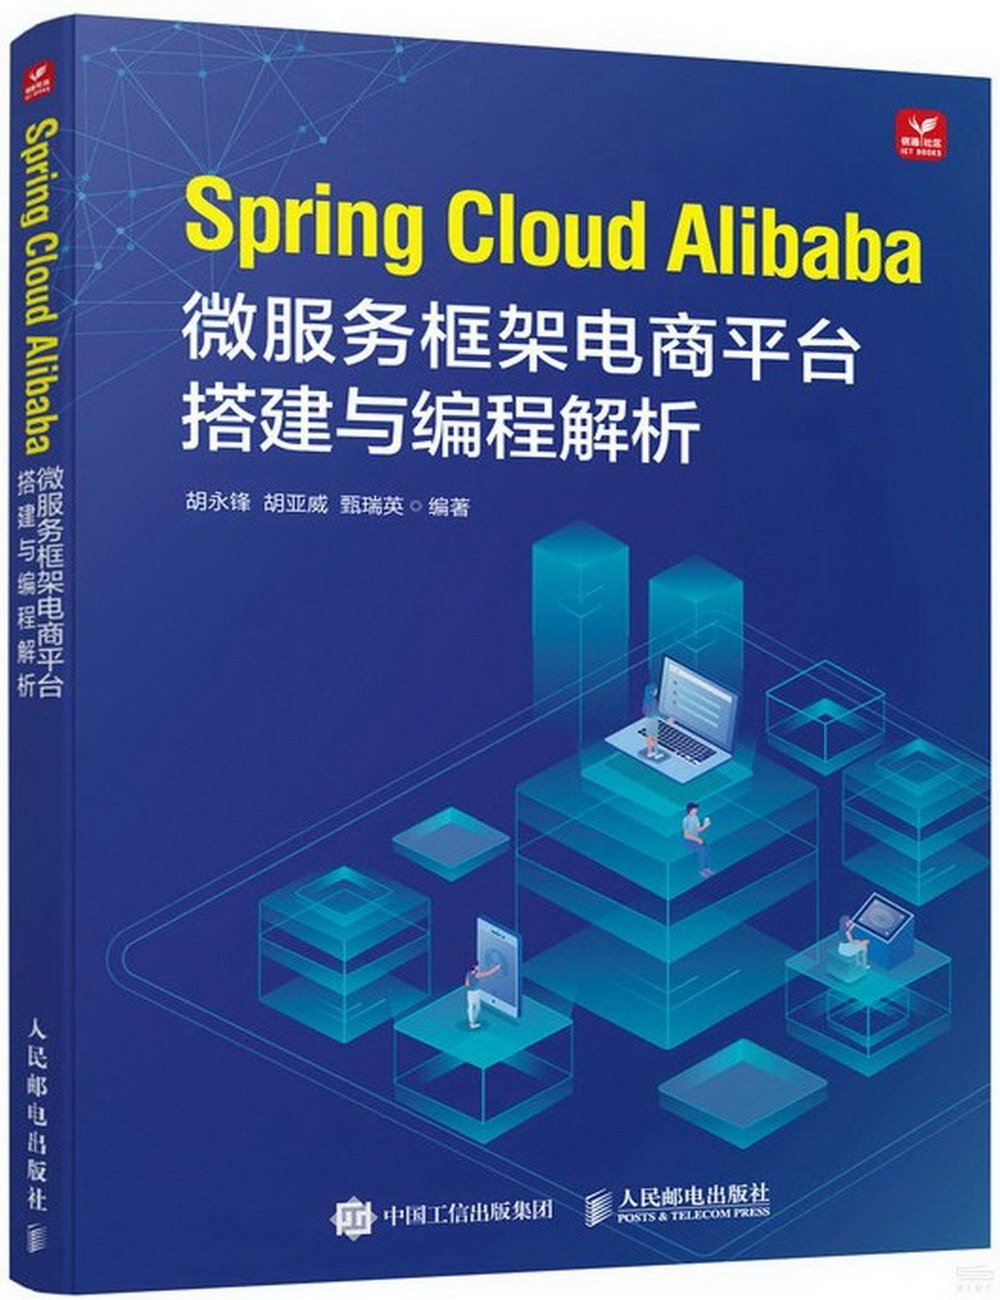 Spring Cloud Alibaba微服務框架電商平台搭建與編程解析